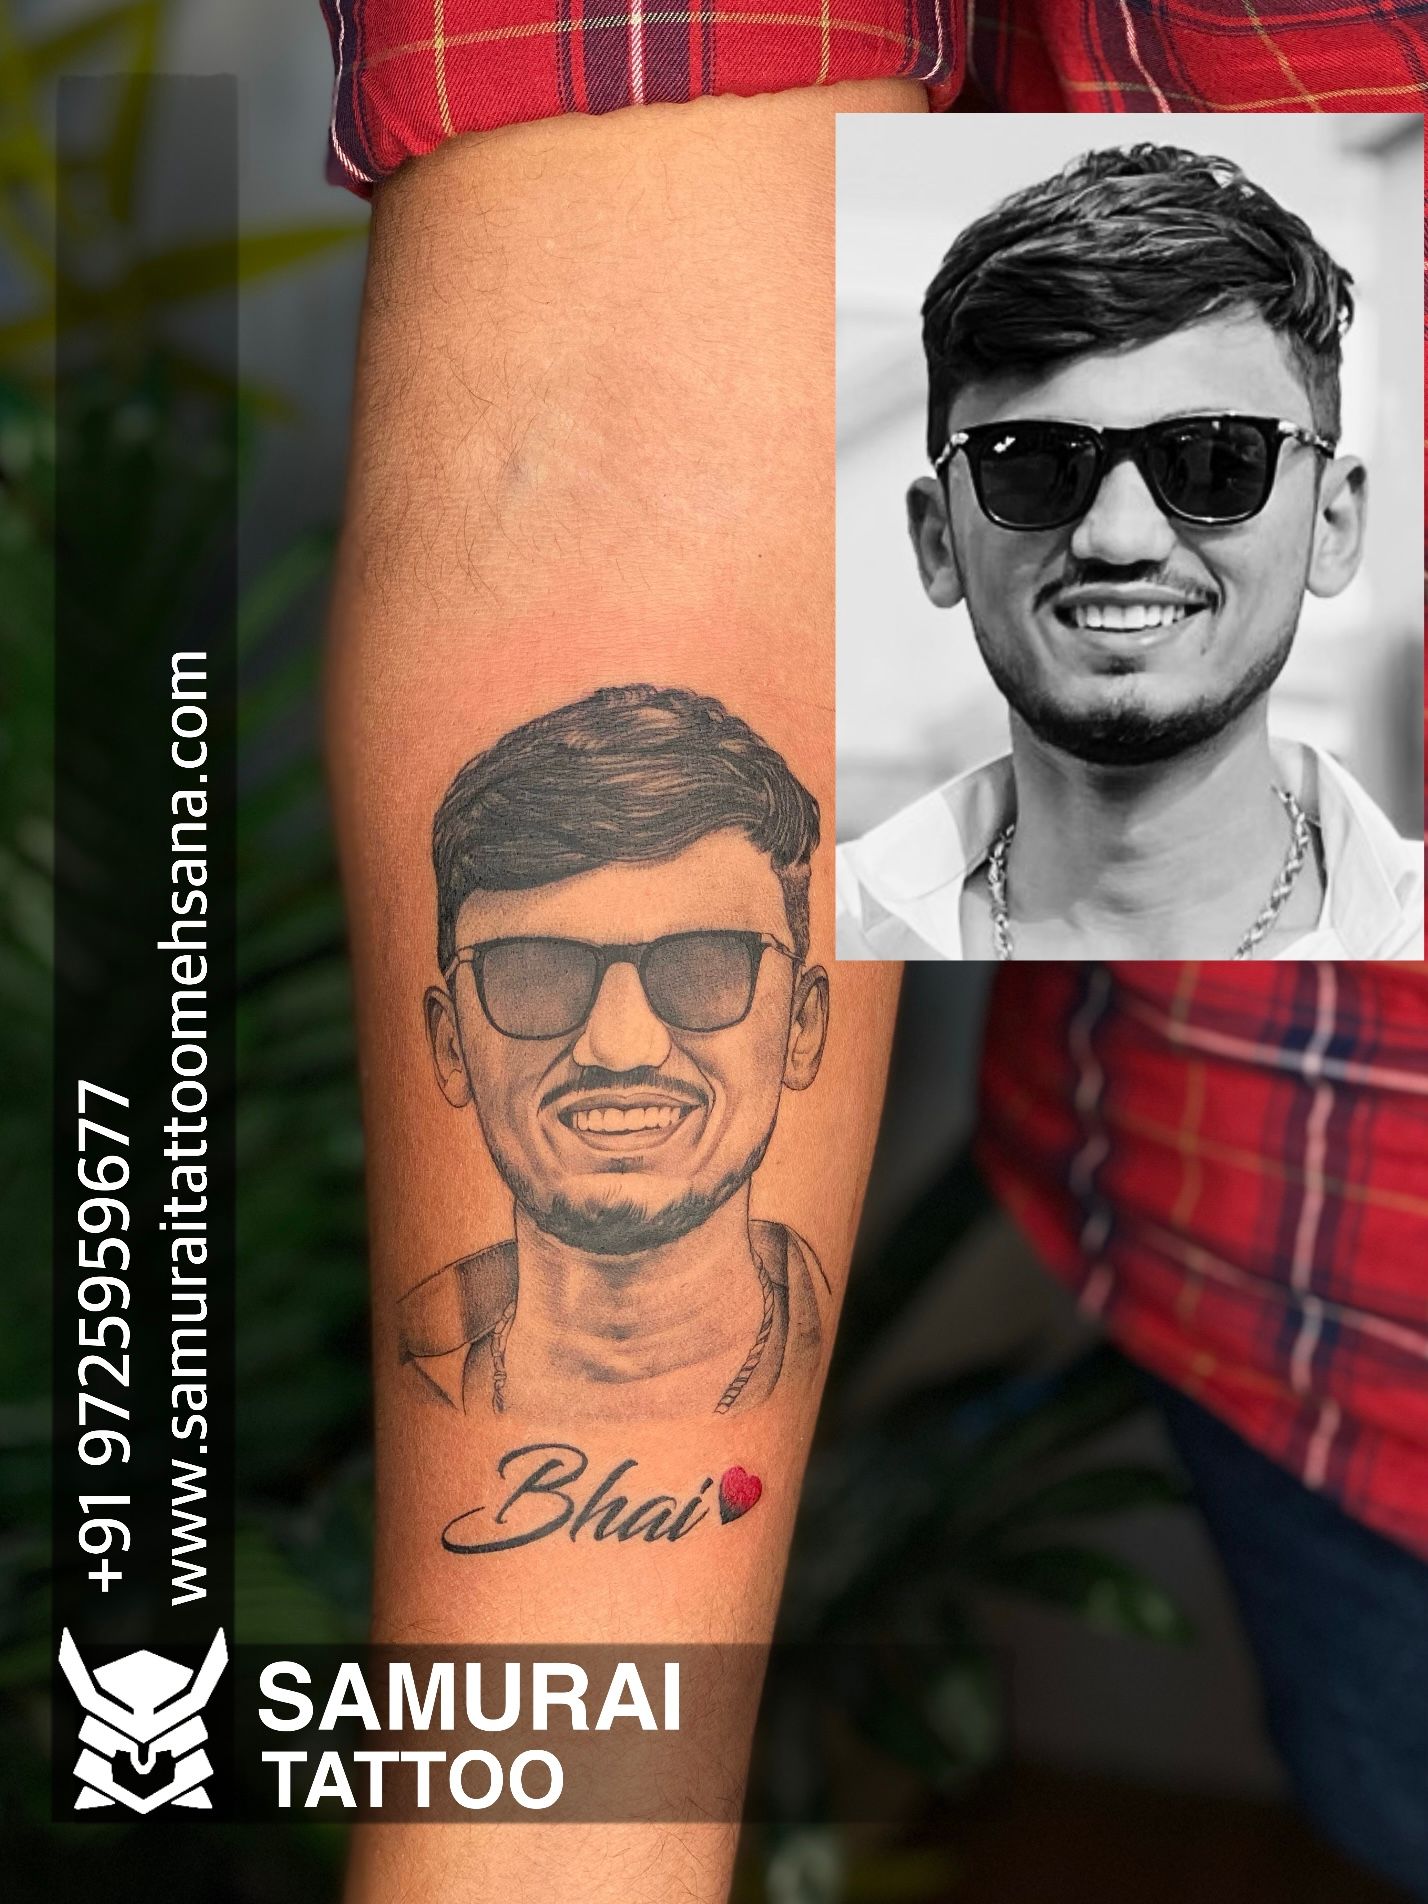 Bhai tattoo || - YouTube